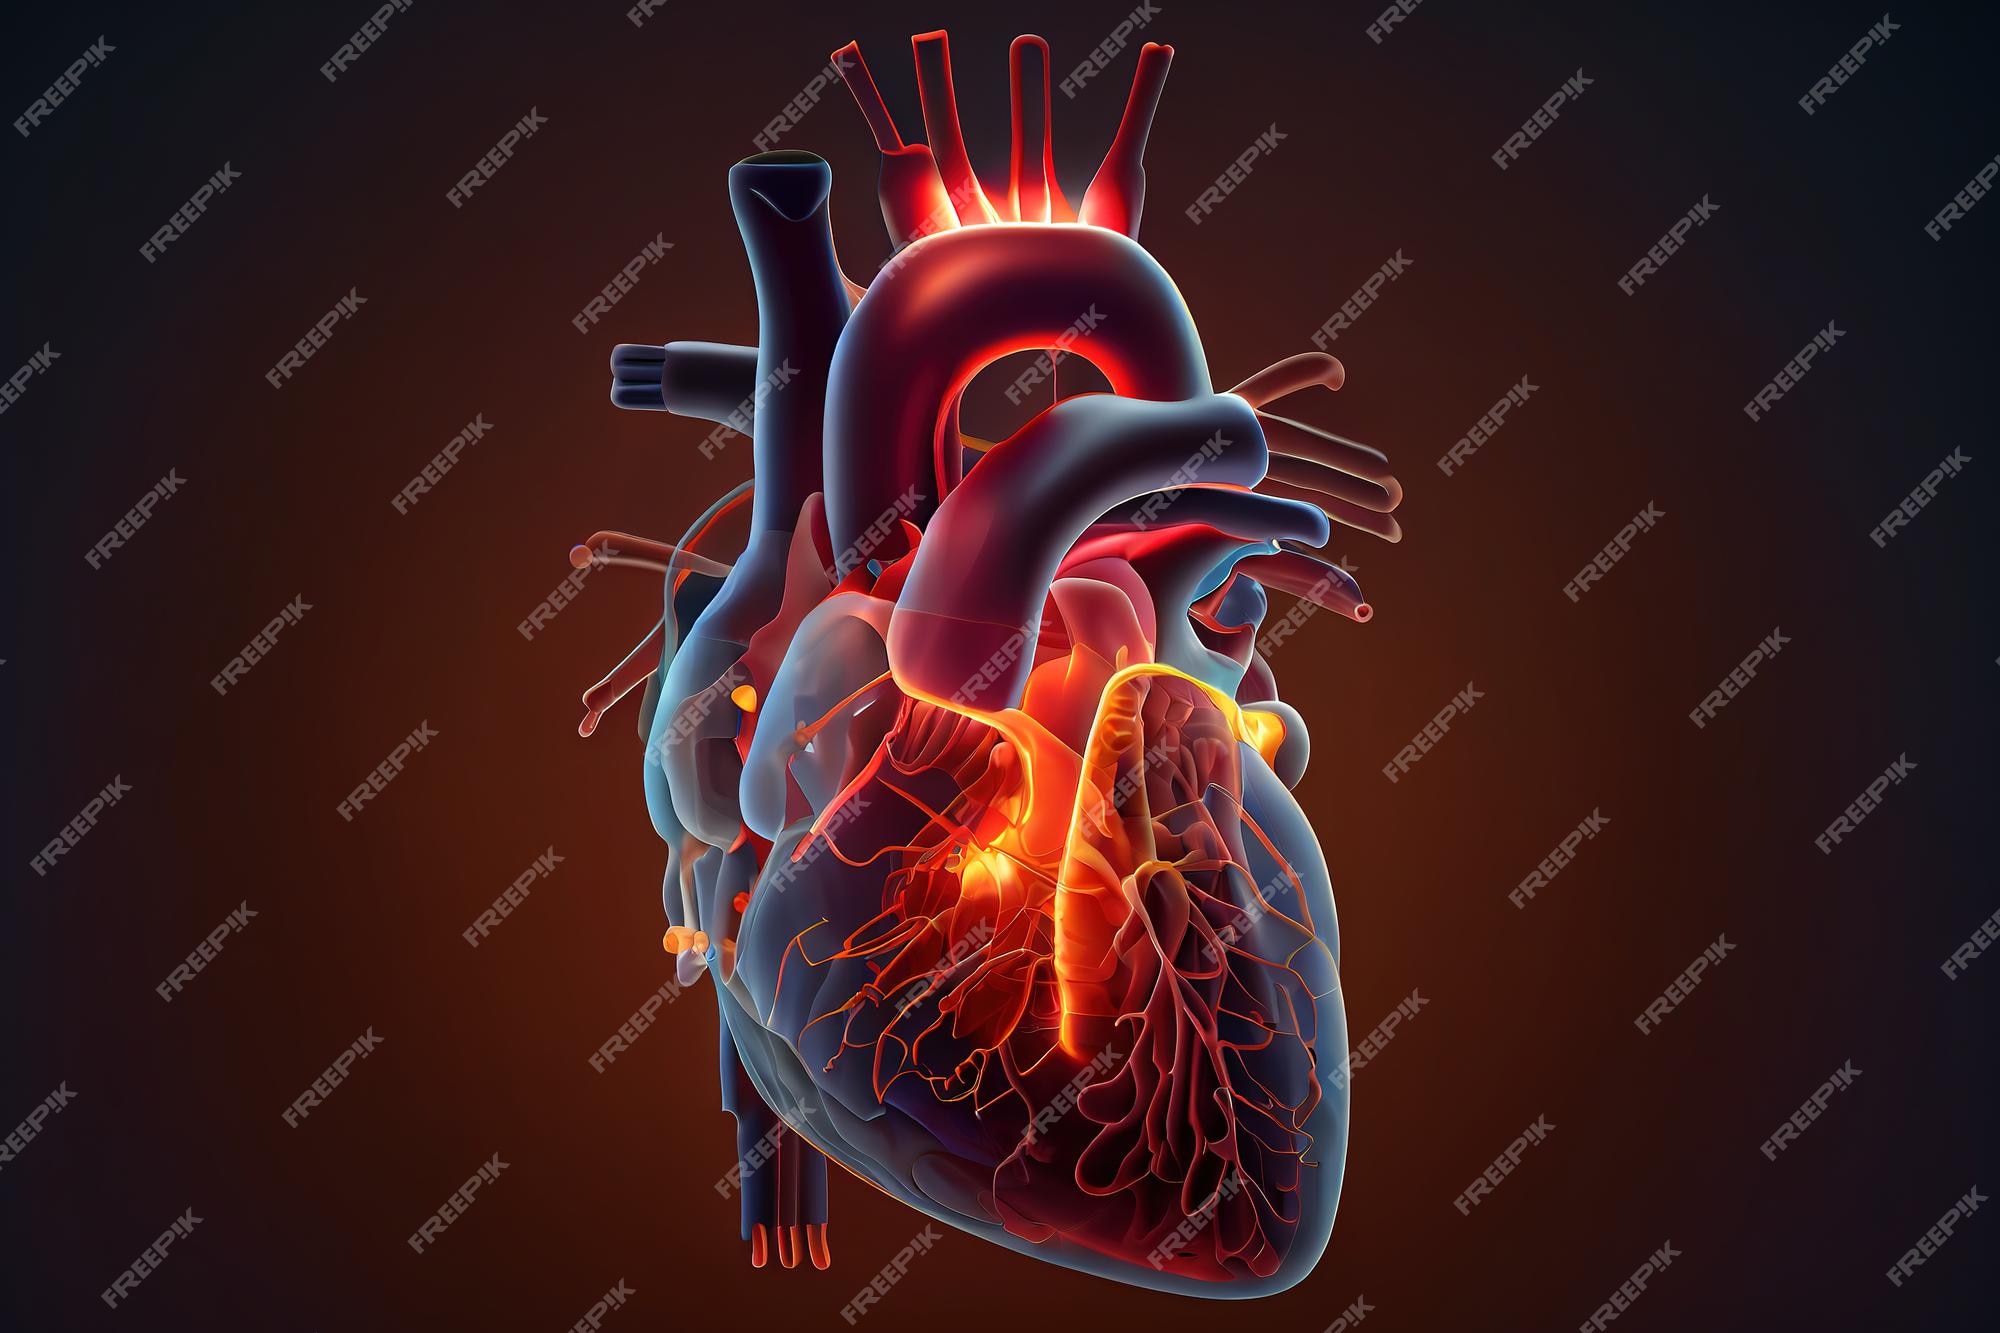 diseased human heart